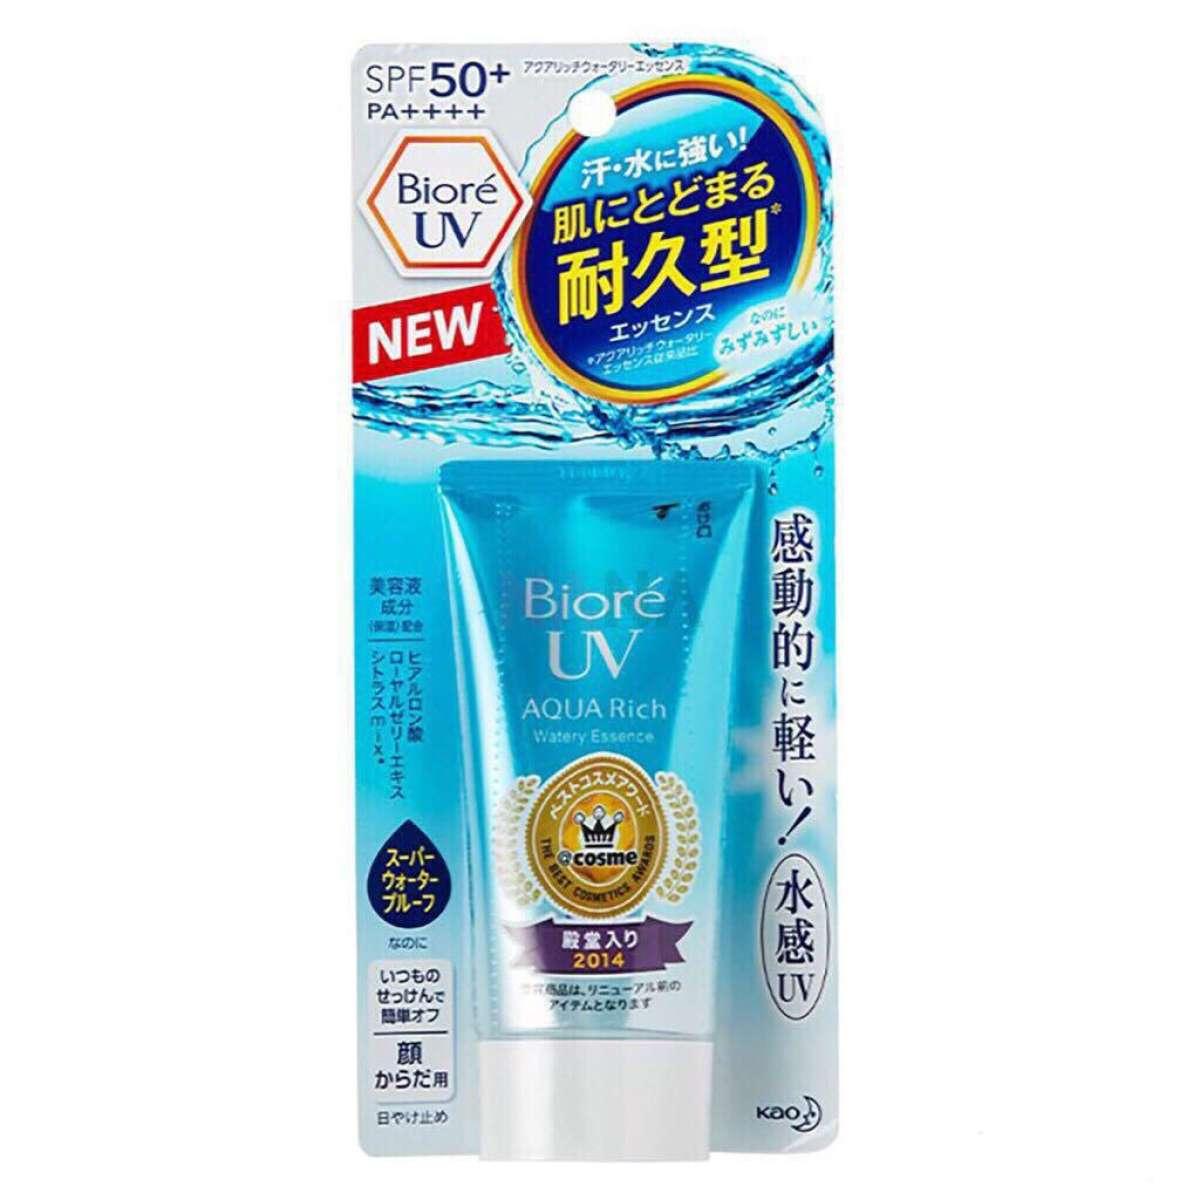 Biore UV Aqua Rich Watery Essence SPF50+PA++++ 50g